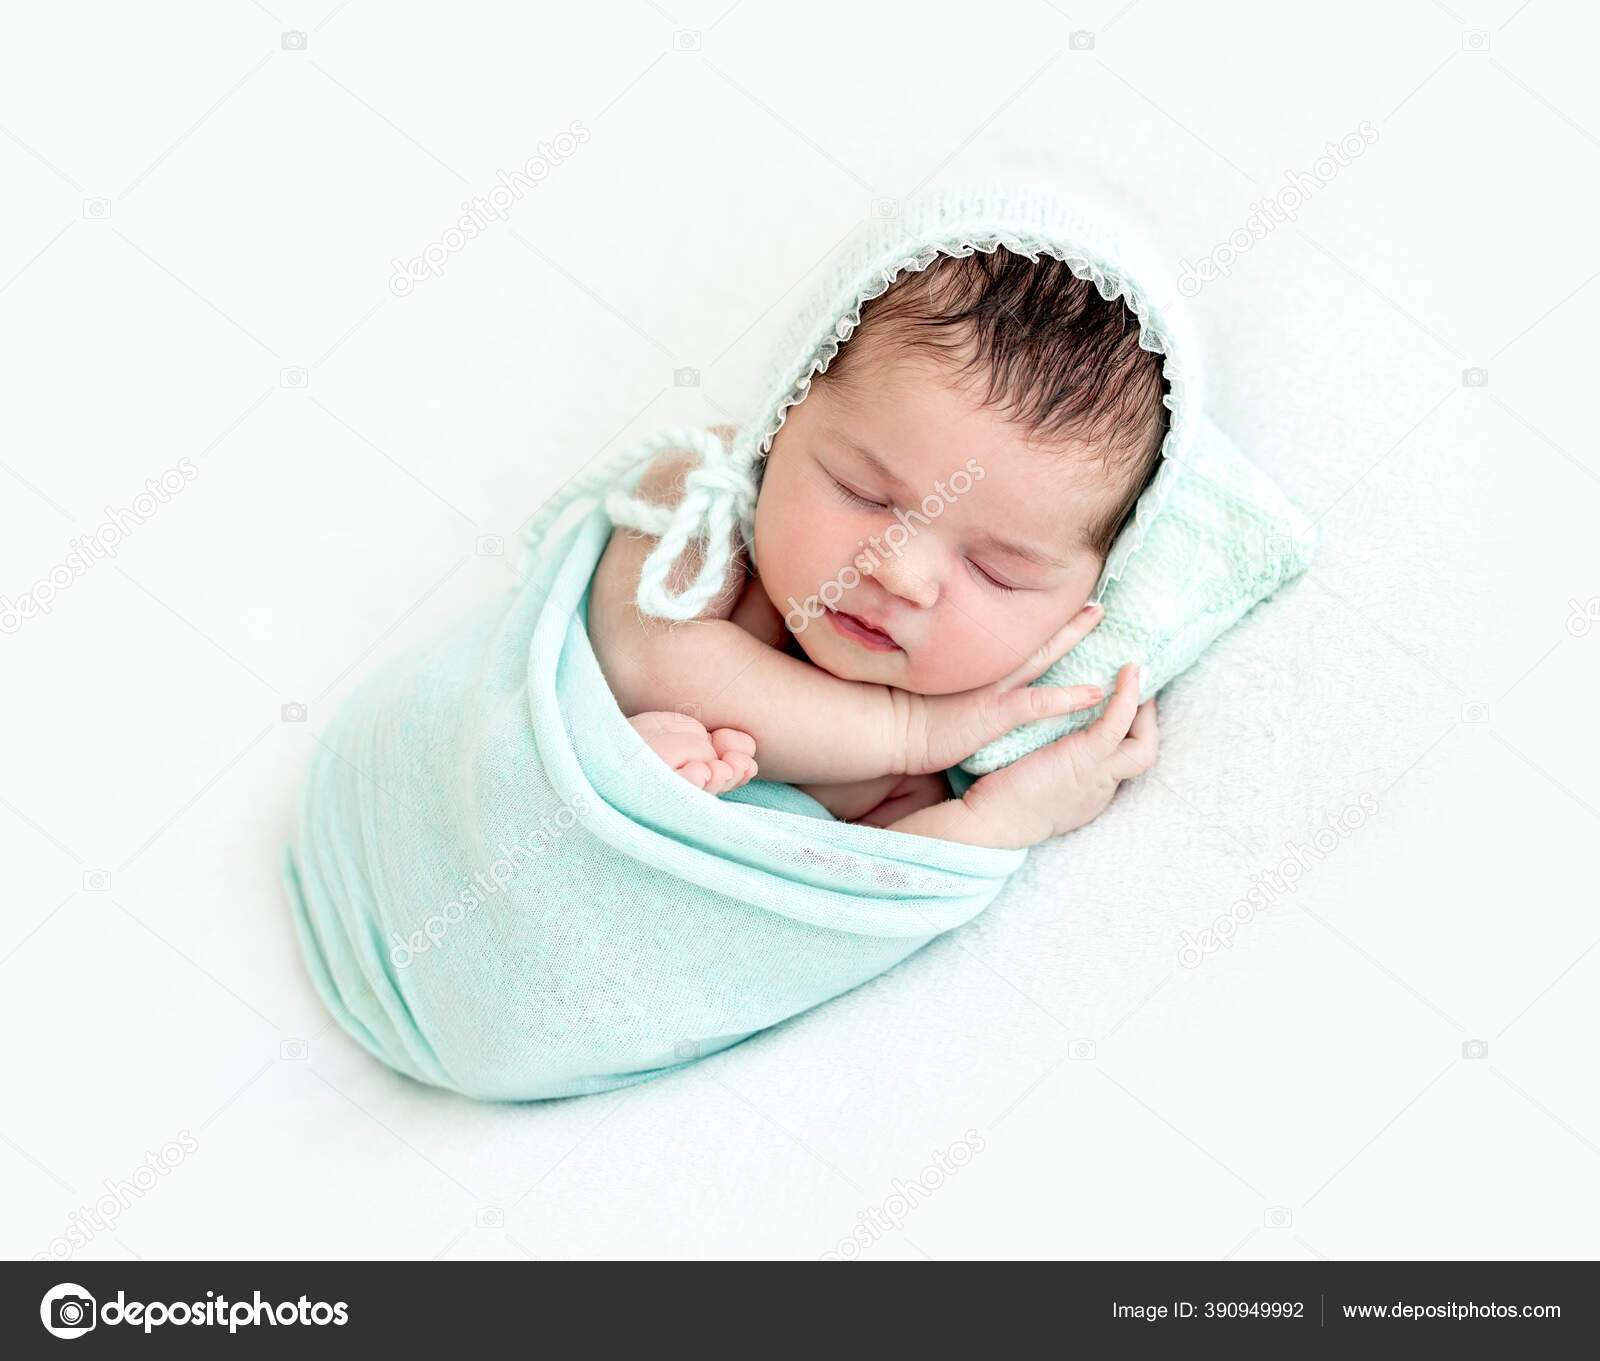 Bayi Yang Lucu Tidur Di Bantal Kecil Stok Foto Tan4ikk 390949992